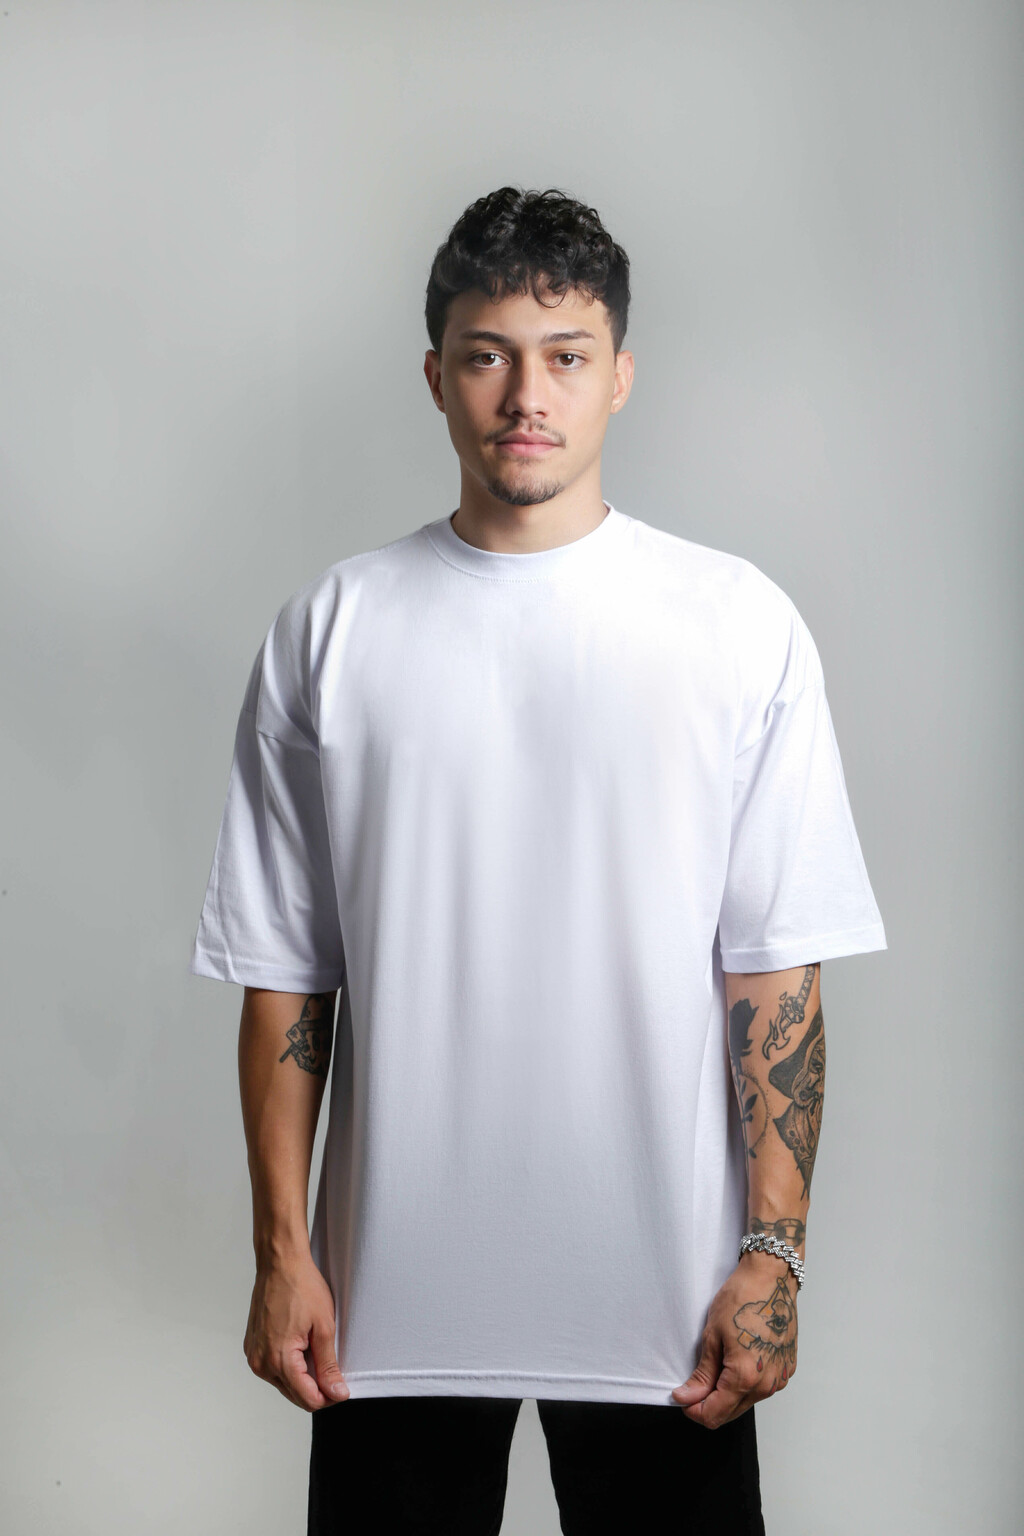 Camiseta OVERSIZED branca lisa blusa camisa Streetwear em algodão 30.1  modelo Premium OVERSIZED